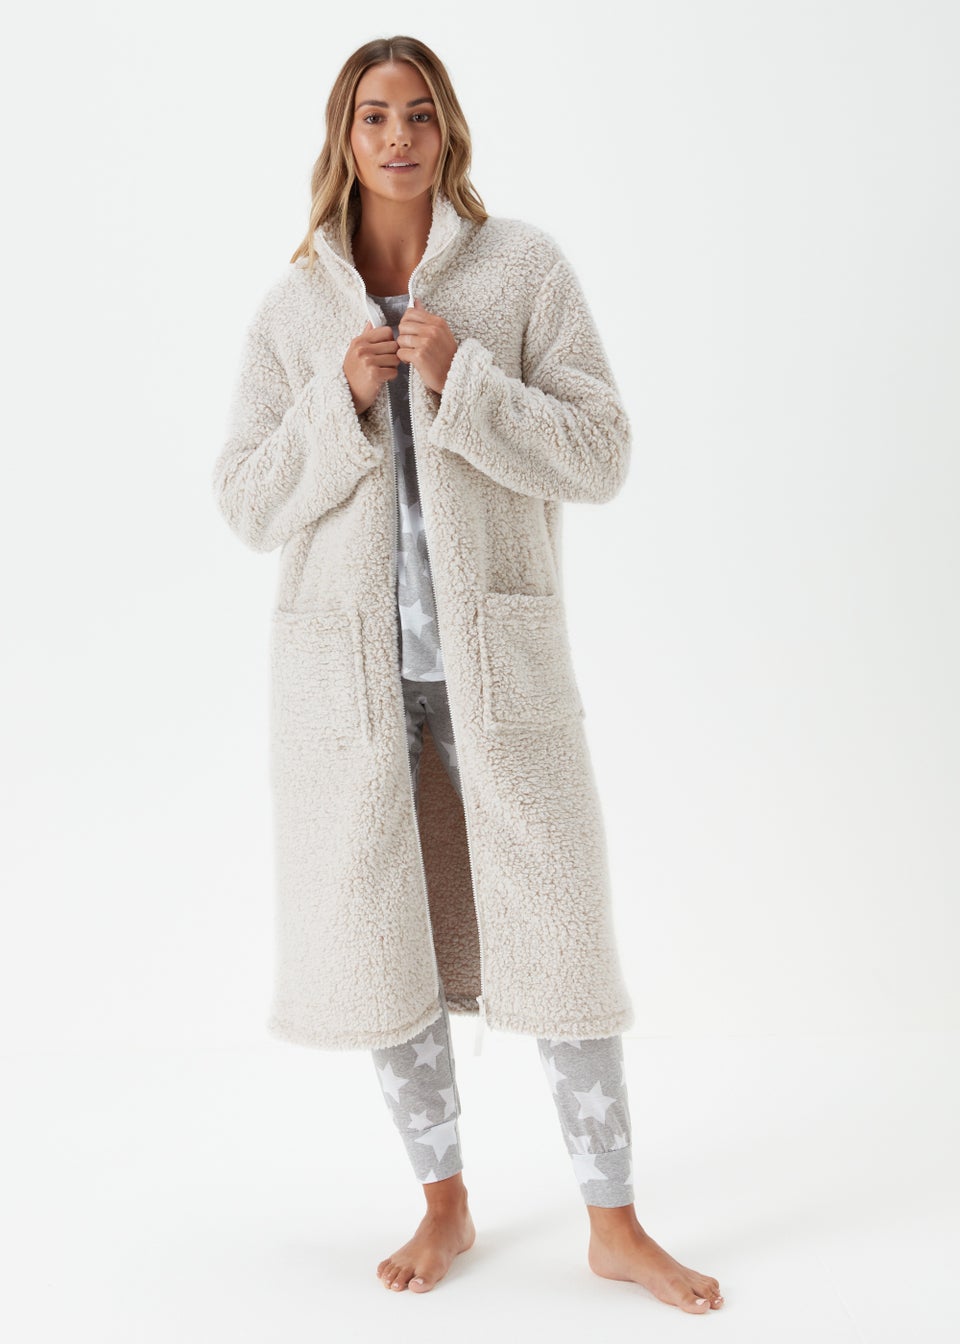 Ladies Soft Cozy Warm Fleece zip up dressing gown Zipped robe Housecoat 10  to 28 | eBay